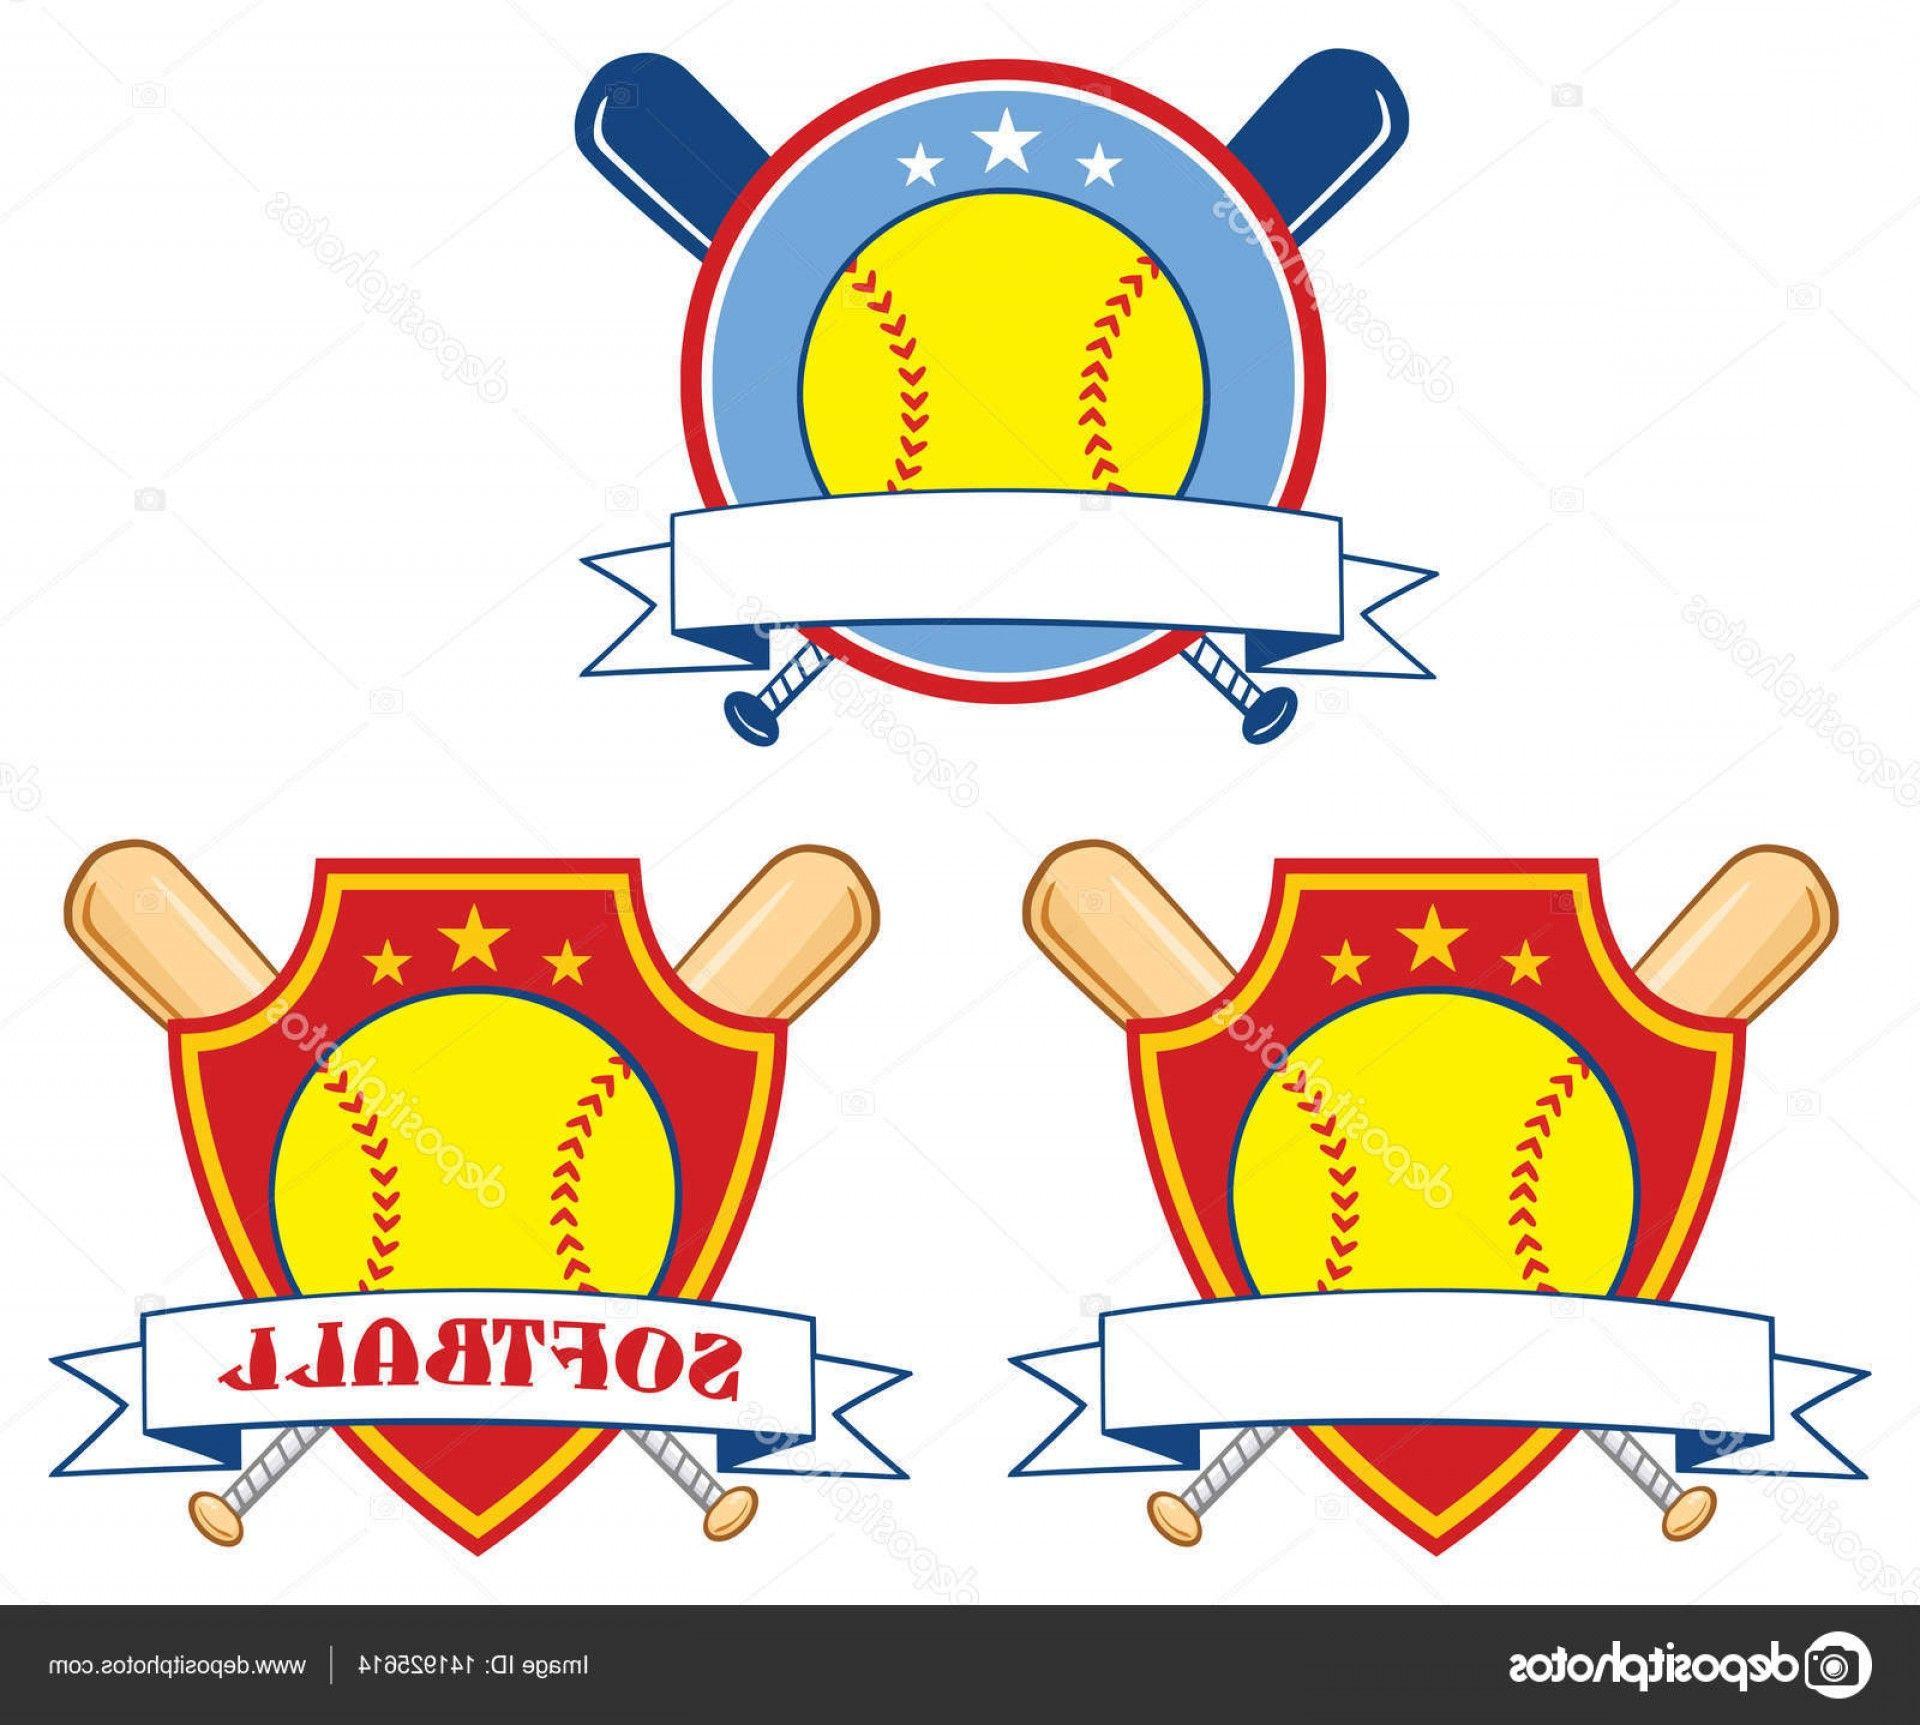 Crossed Bats and Softball Logo - Stock Illustration Yellow Softball Over Crossed Bats | LaztTweet